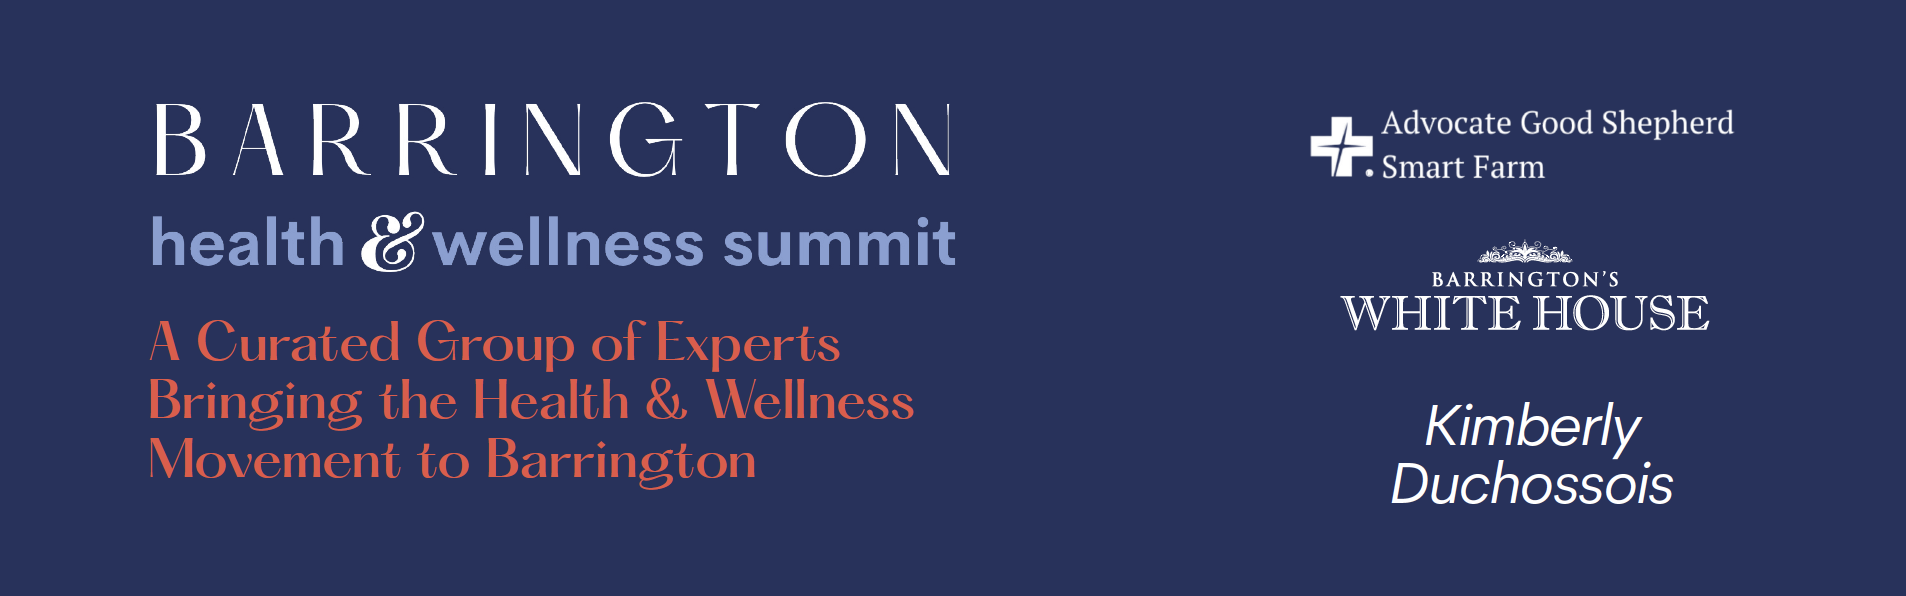 Barrington Health & Wellness Summit Banner